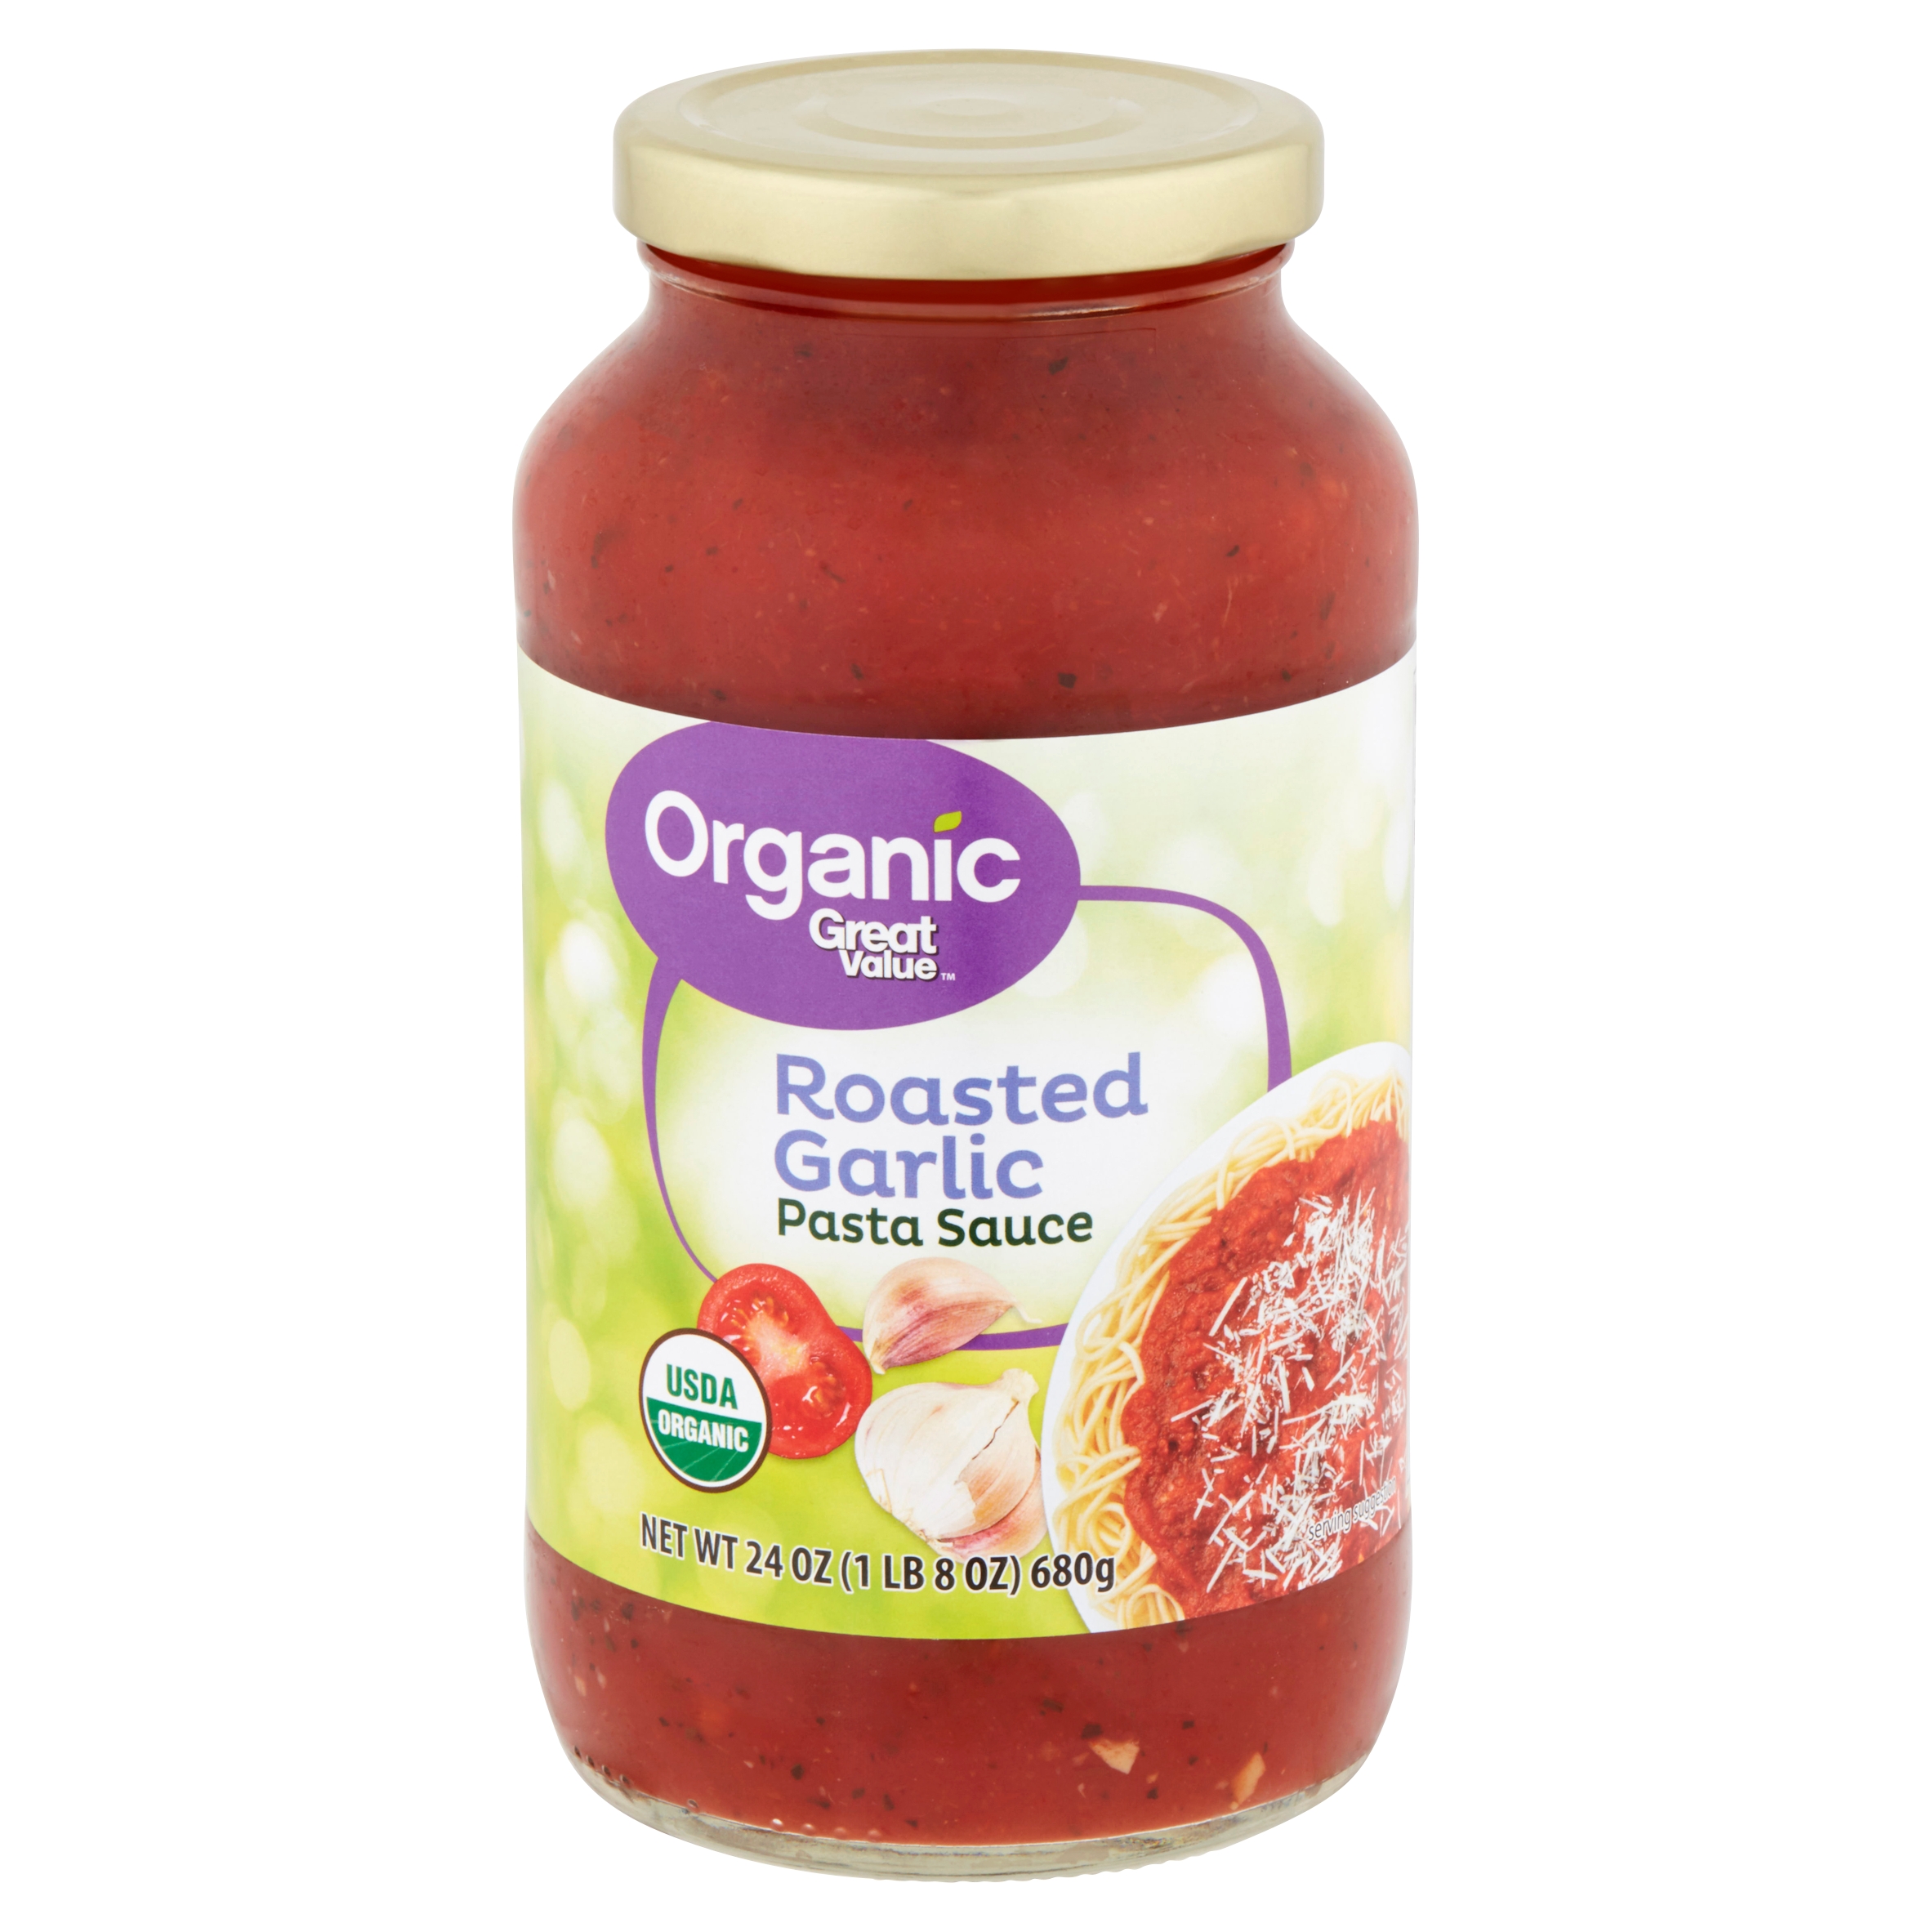 Great Value Organic Roasted Garlic Pasta Sauce, 24 Oz